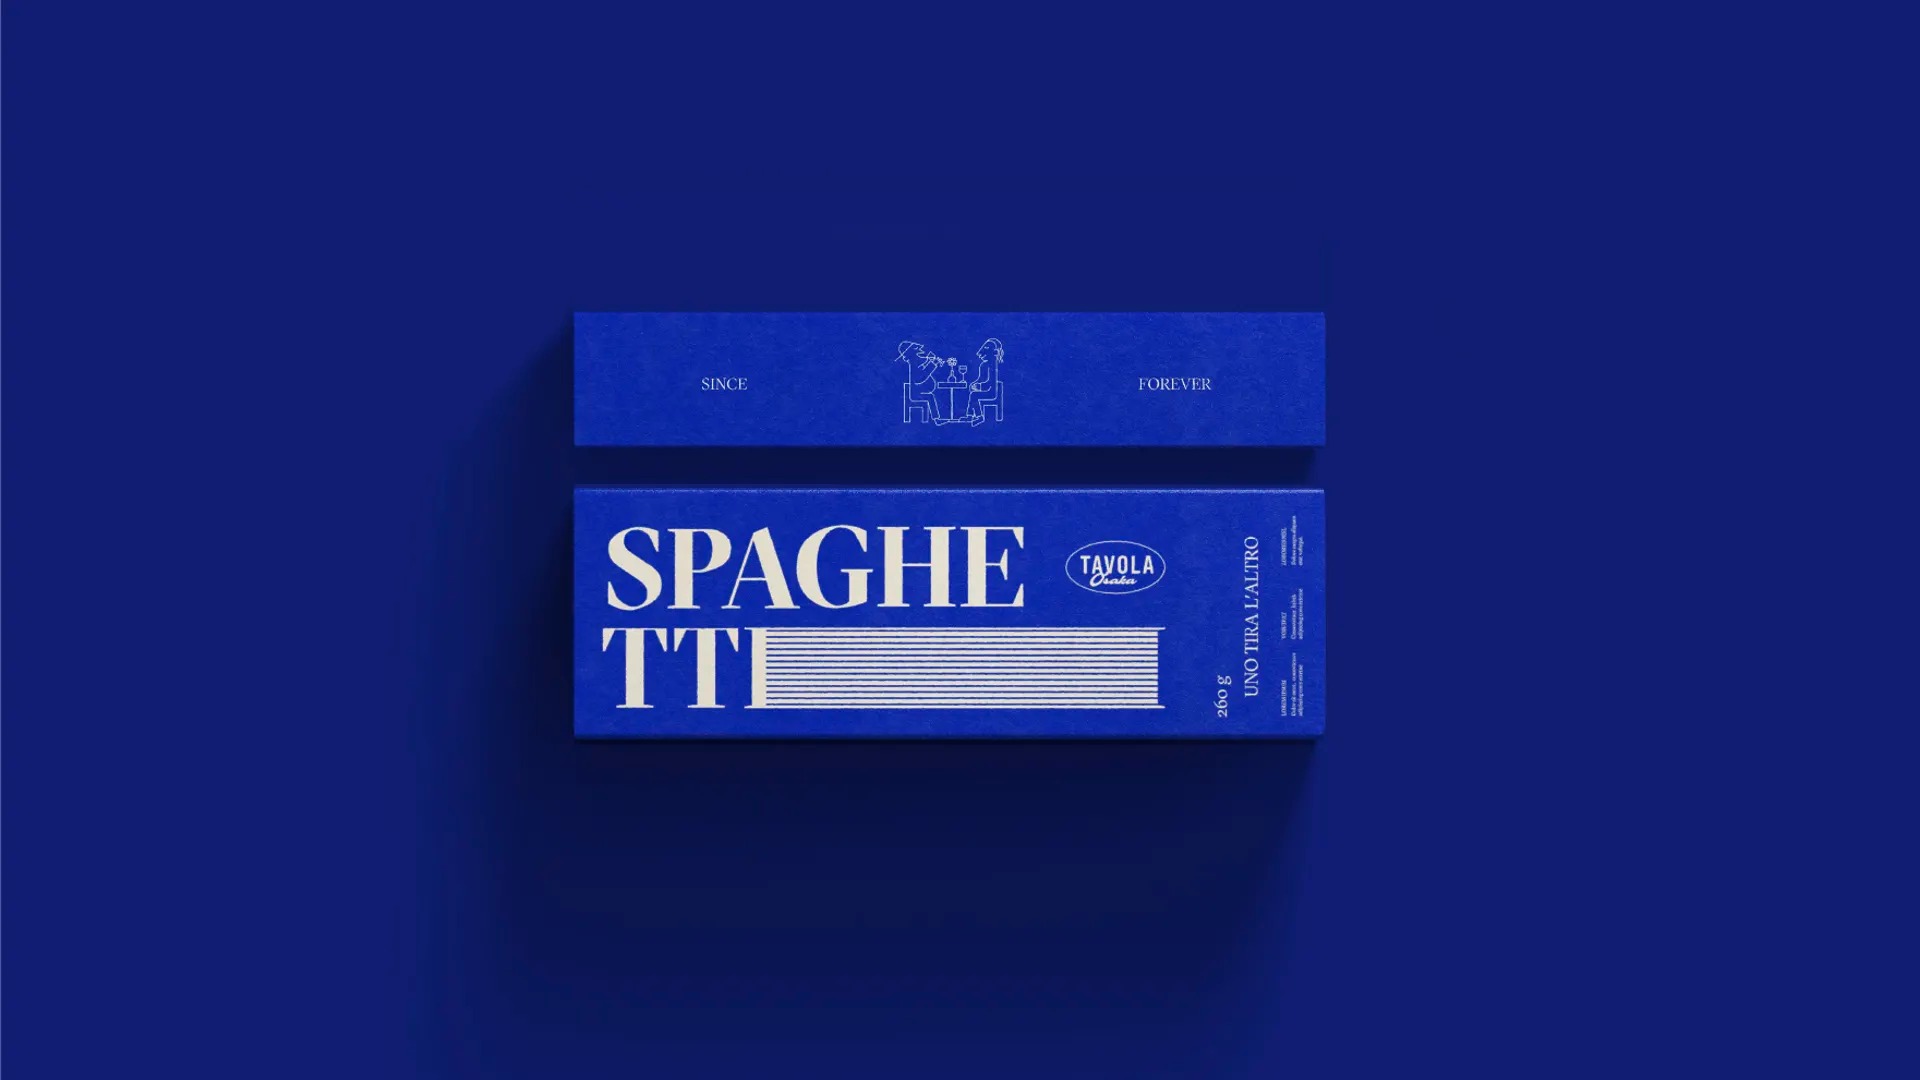 Volta Pasta Makes Creative Use of Typography